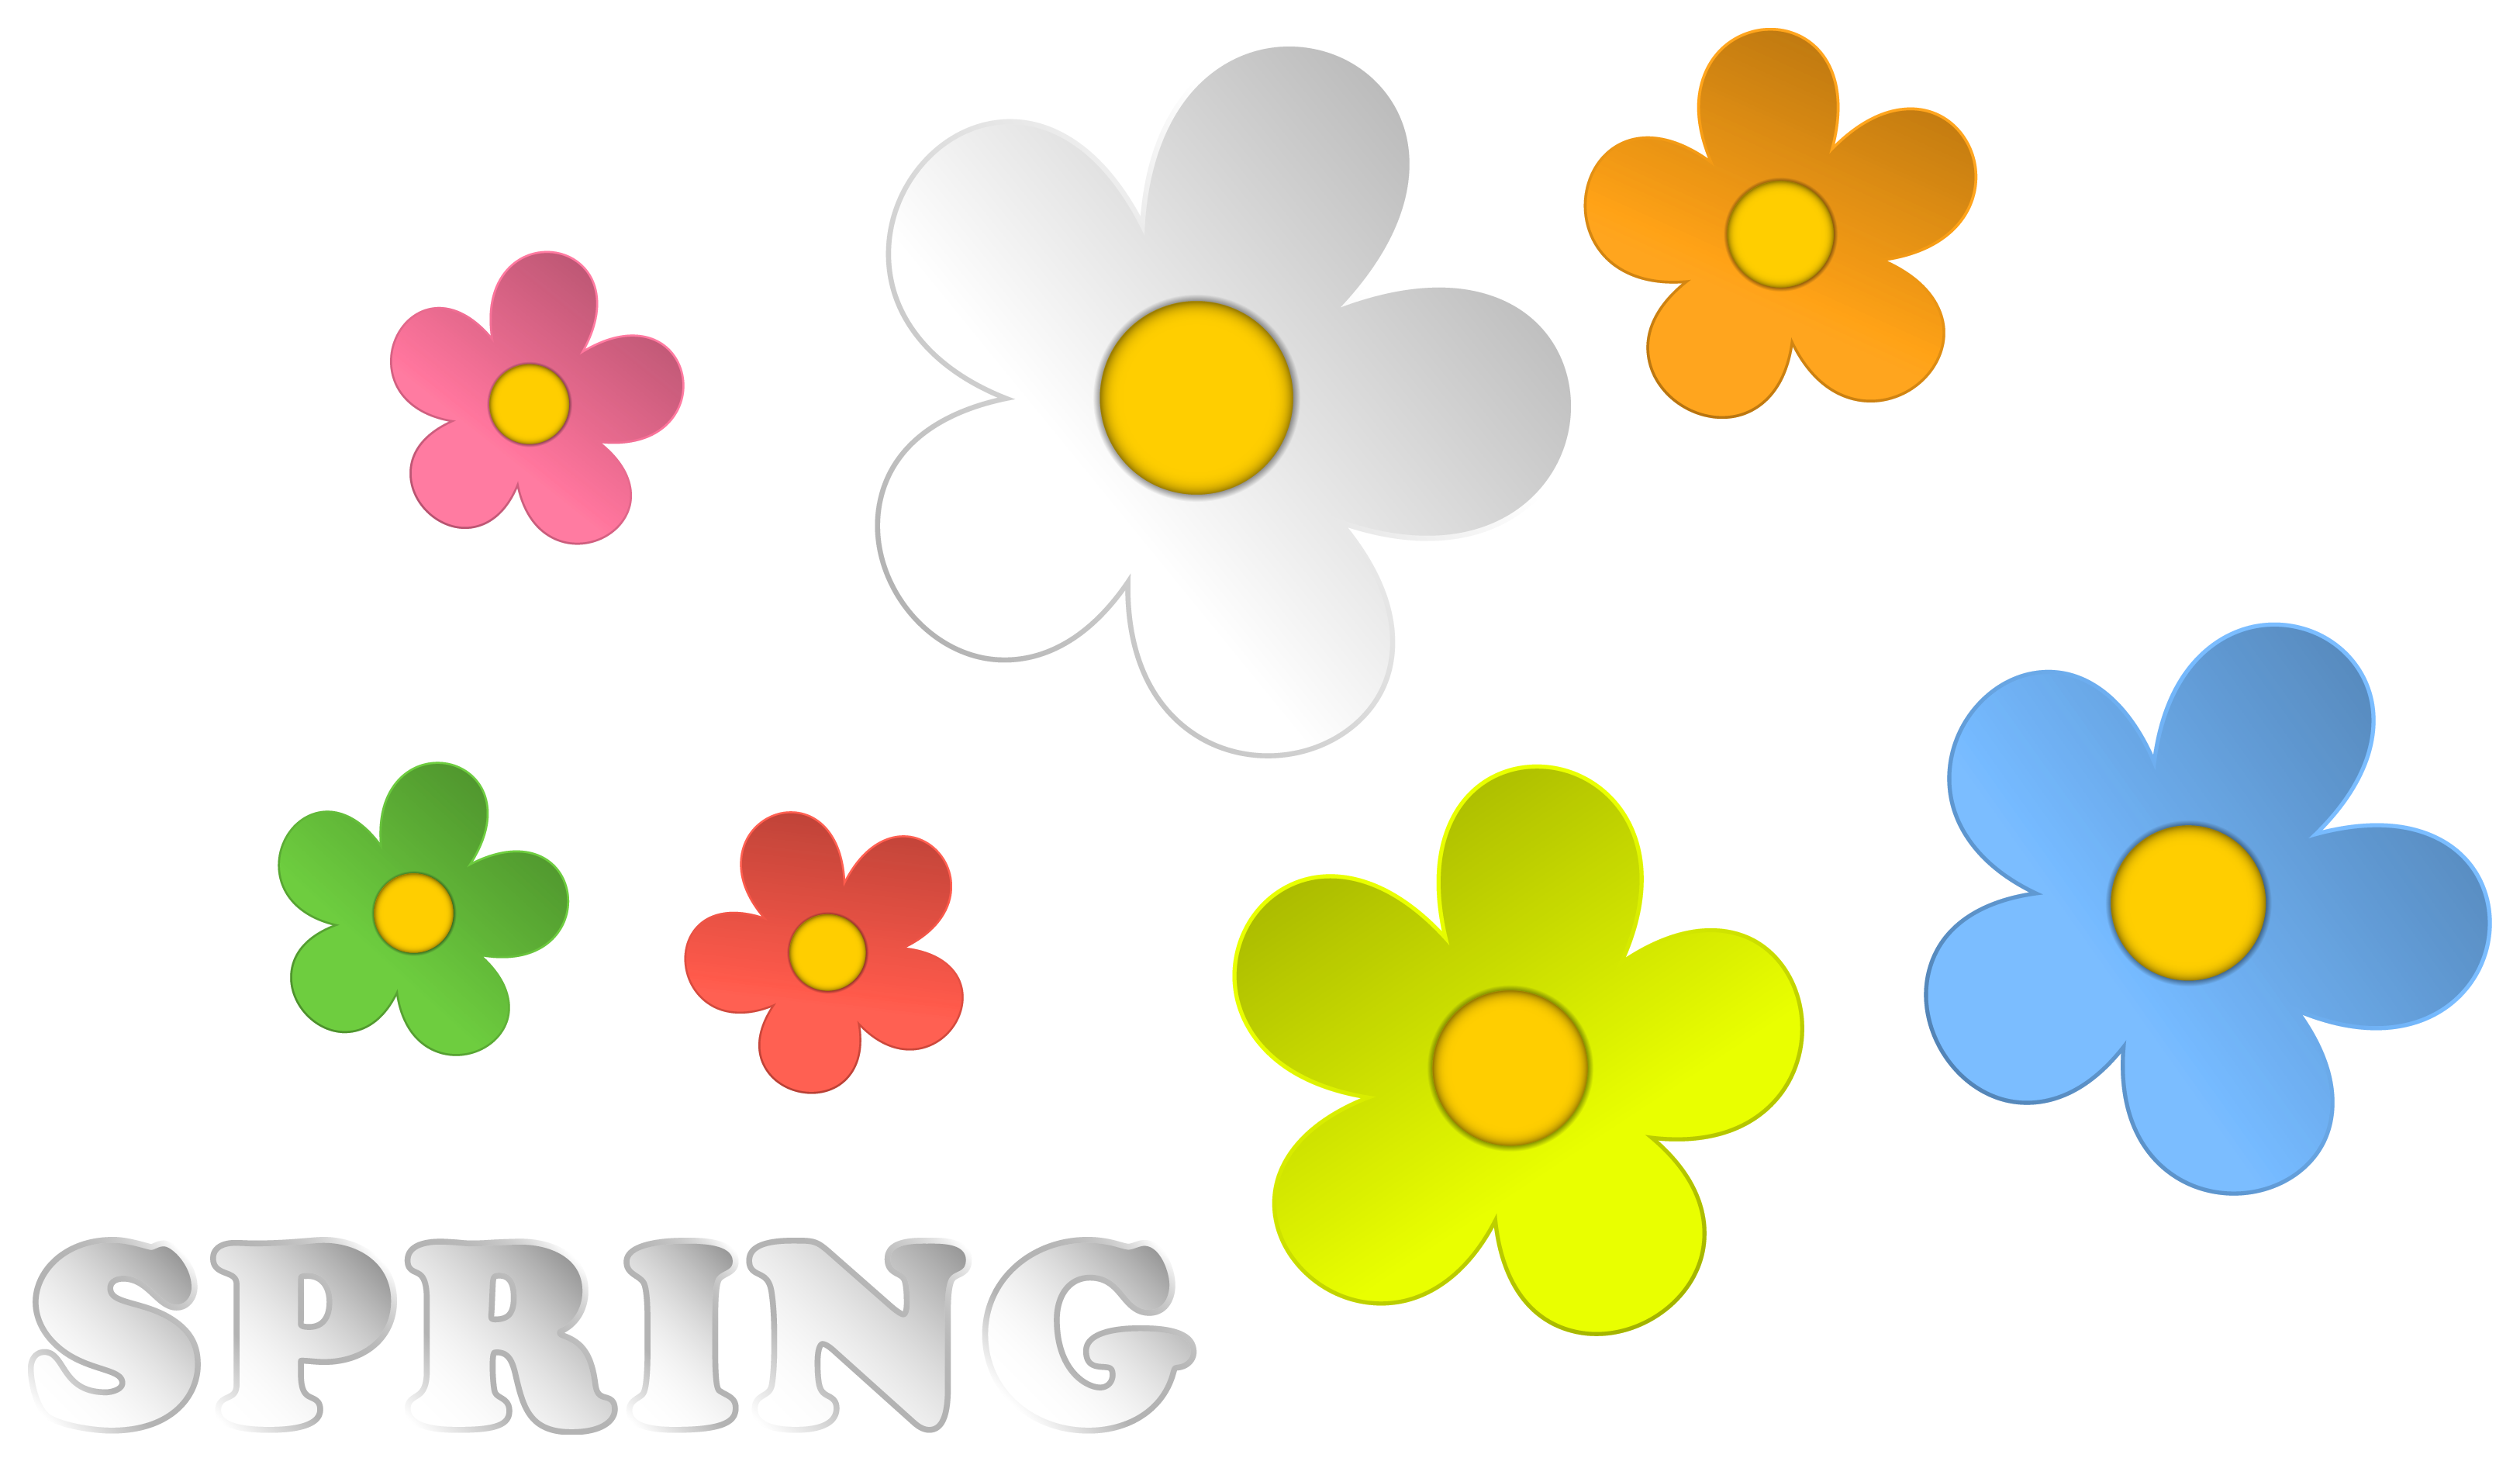 spring flowers clip art free